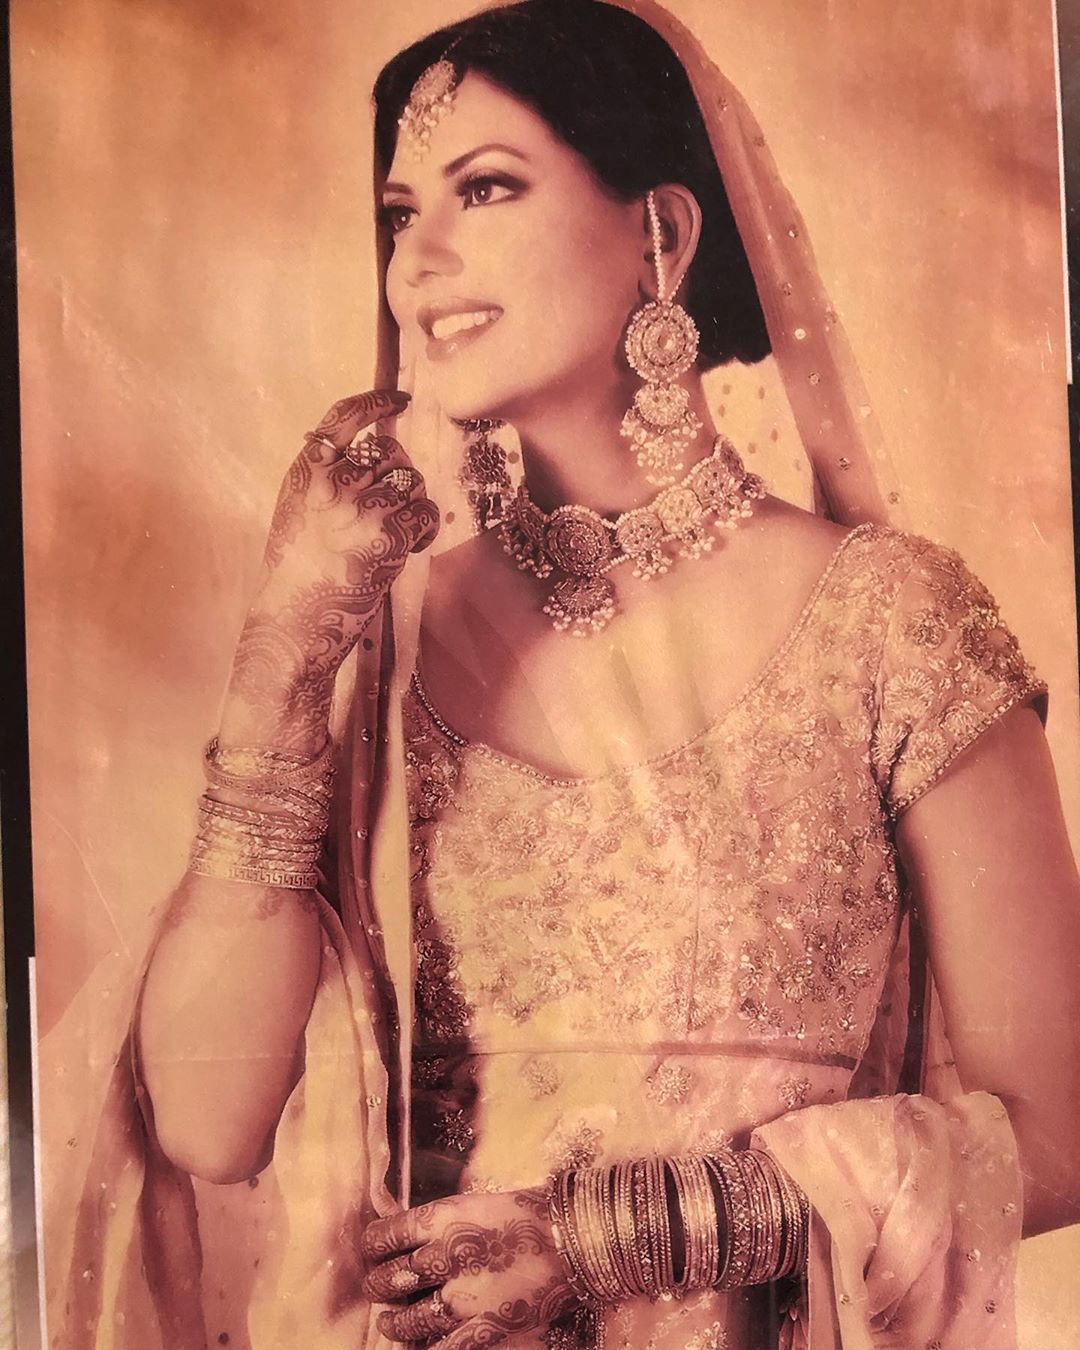 Sunita Marshal Wedding - 20 Exclusive Pictures